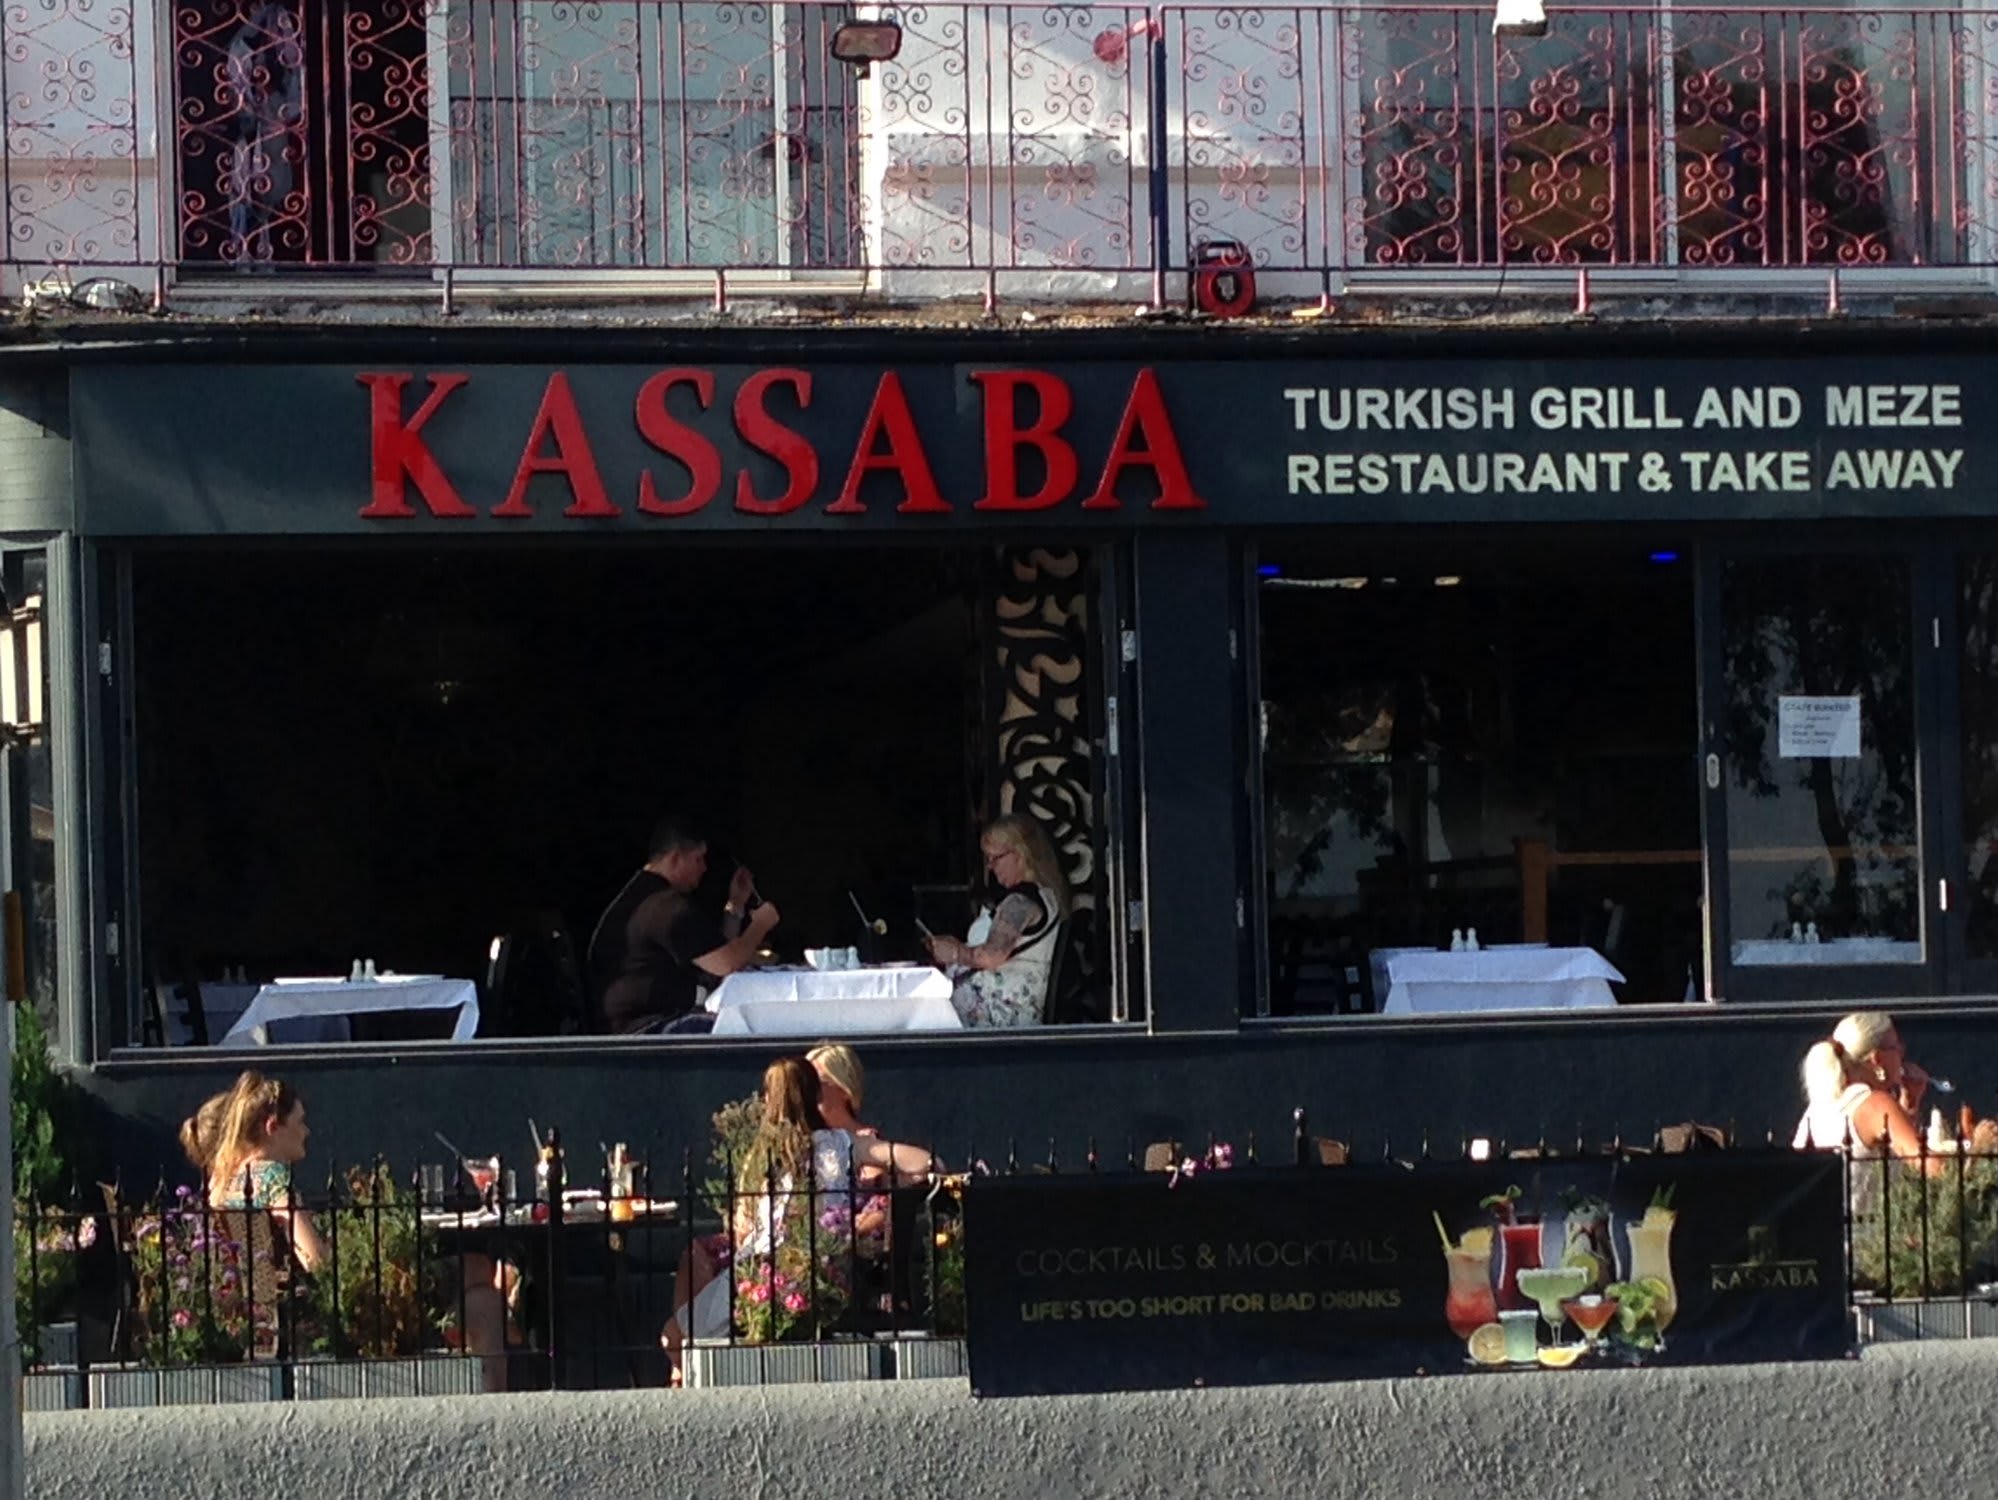 The Kassaba Restaurant and  Meze